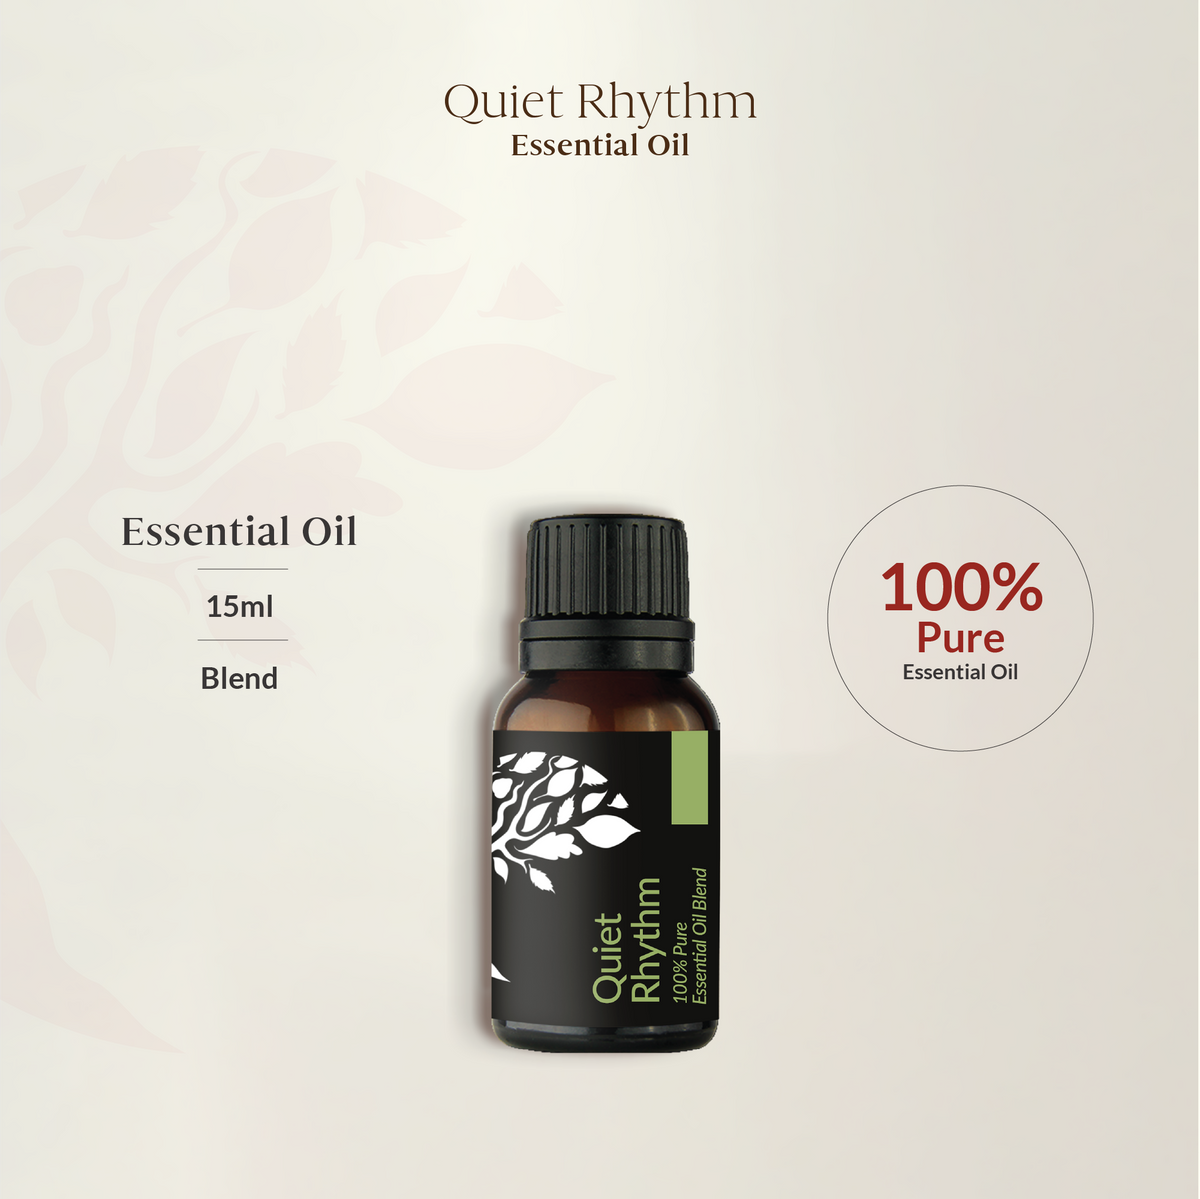 Quiet Rhythm Essential Oil Blend 15ml